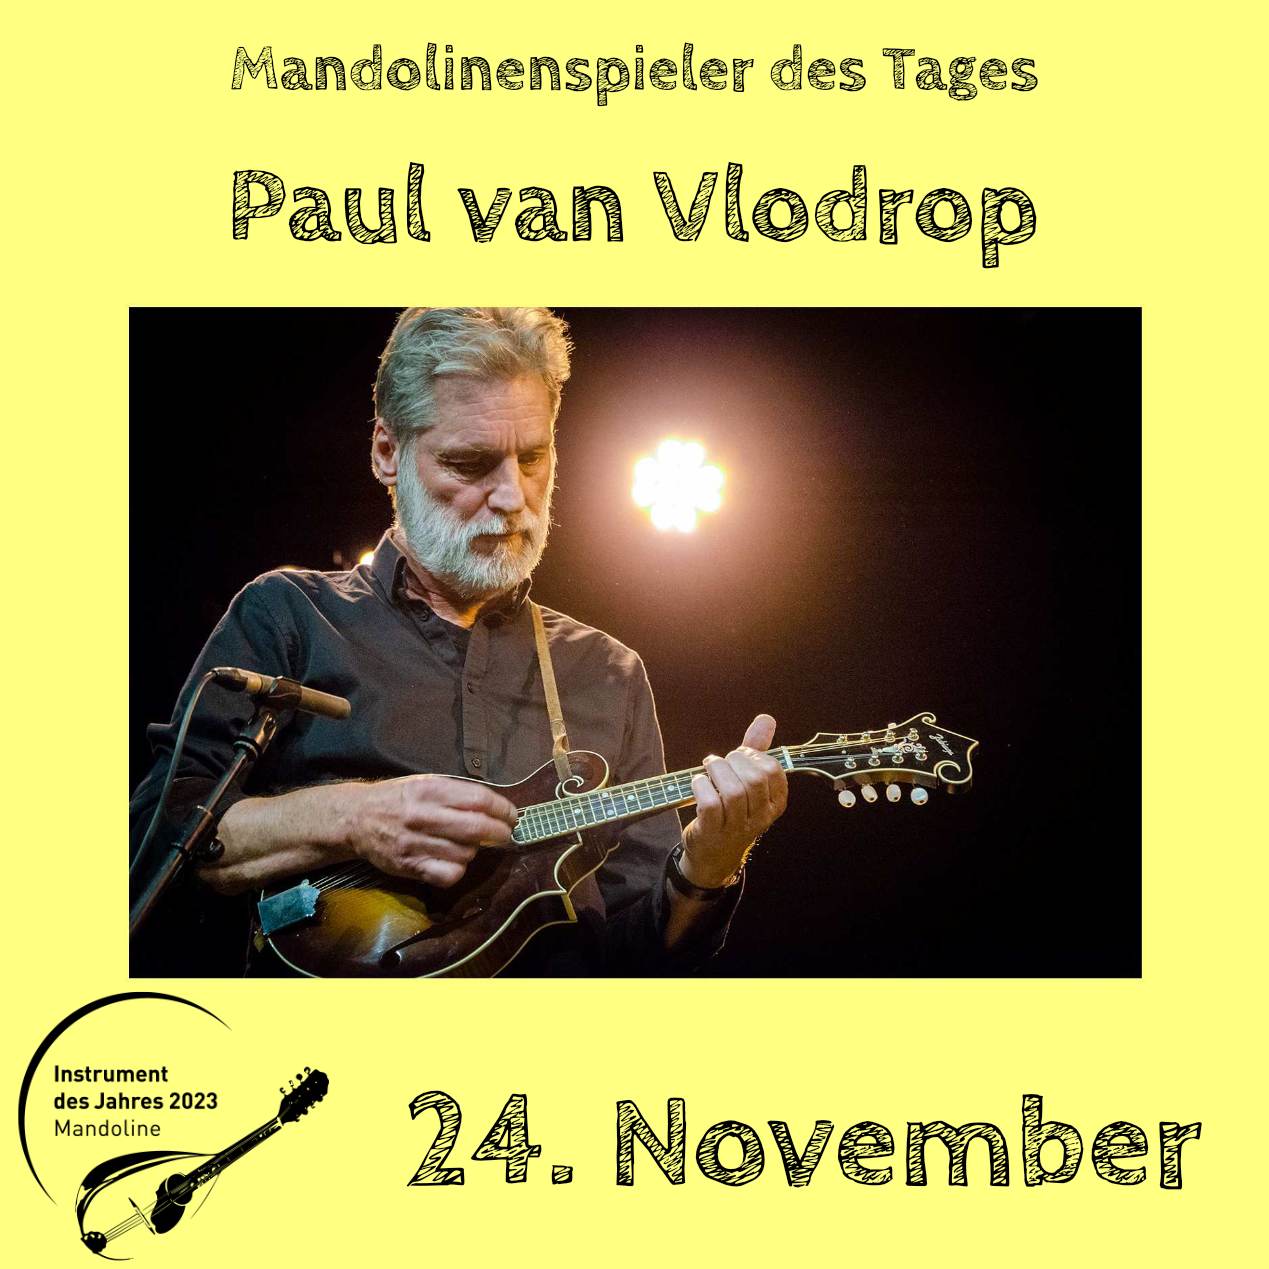 24. November - Paul van Vlodrop Instrument des Jahres 2023 Mandolinenspieler Mandolinenspielerin des Tages